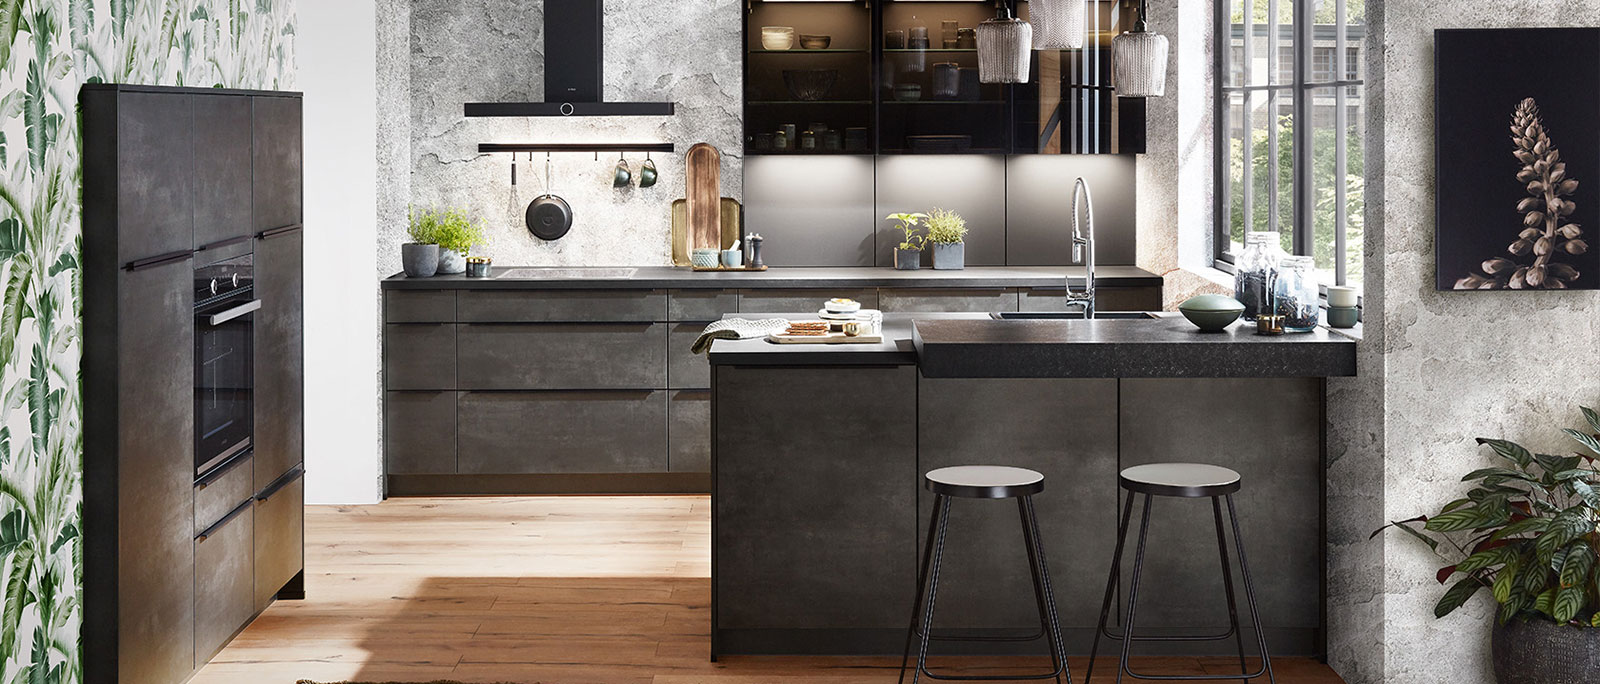 5 important Key elements that influence Modern kitchen design